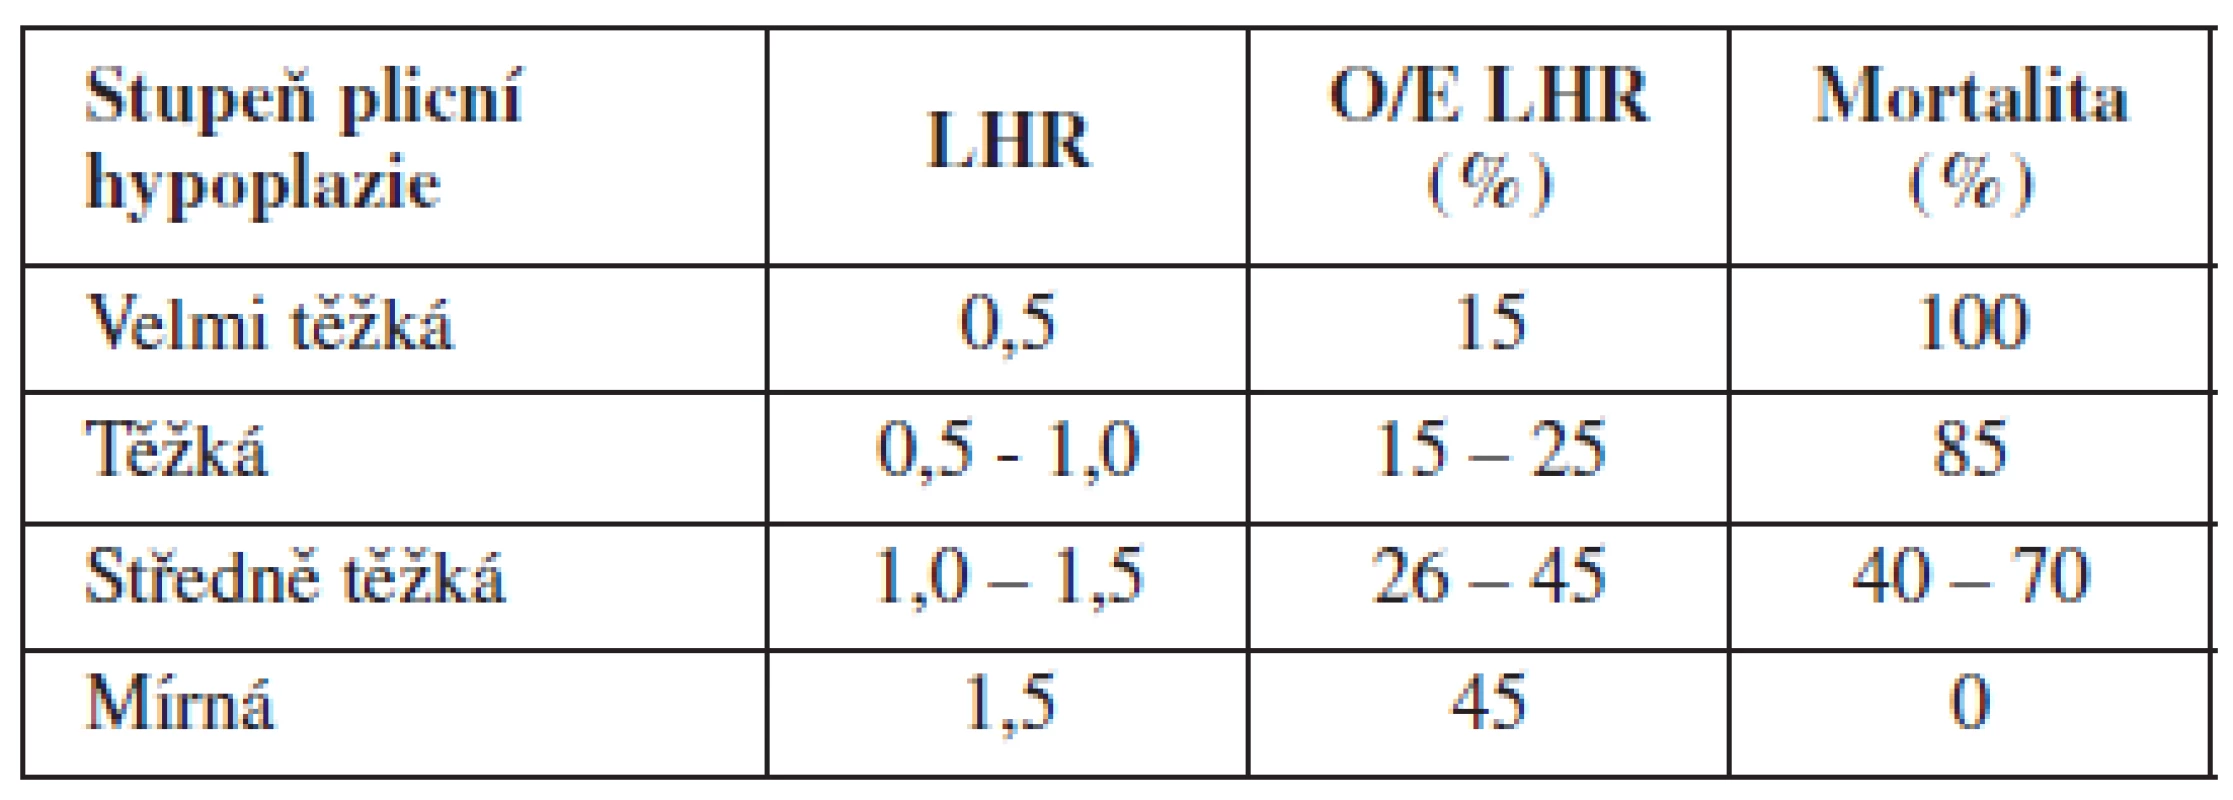 Předpokládaná mortalita novorozenců s CDH ve vztahu k LHR a O/E LHR [4]